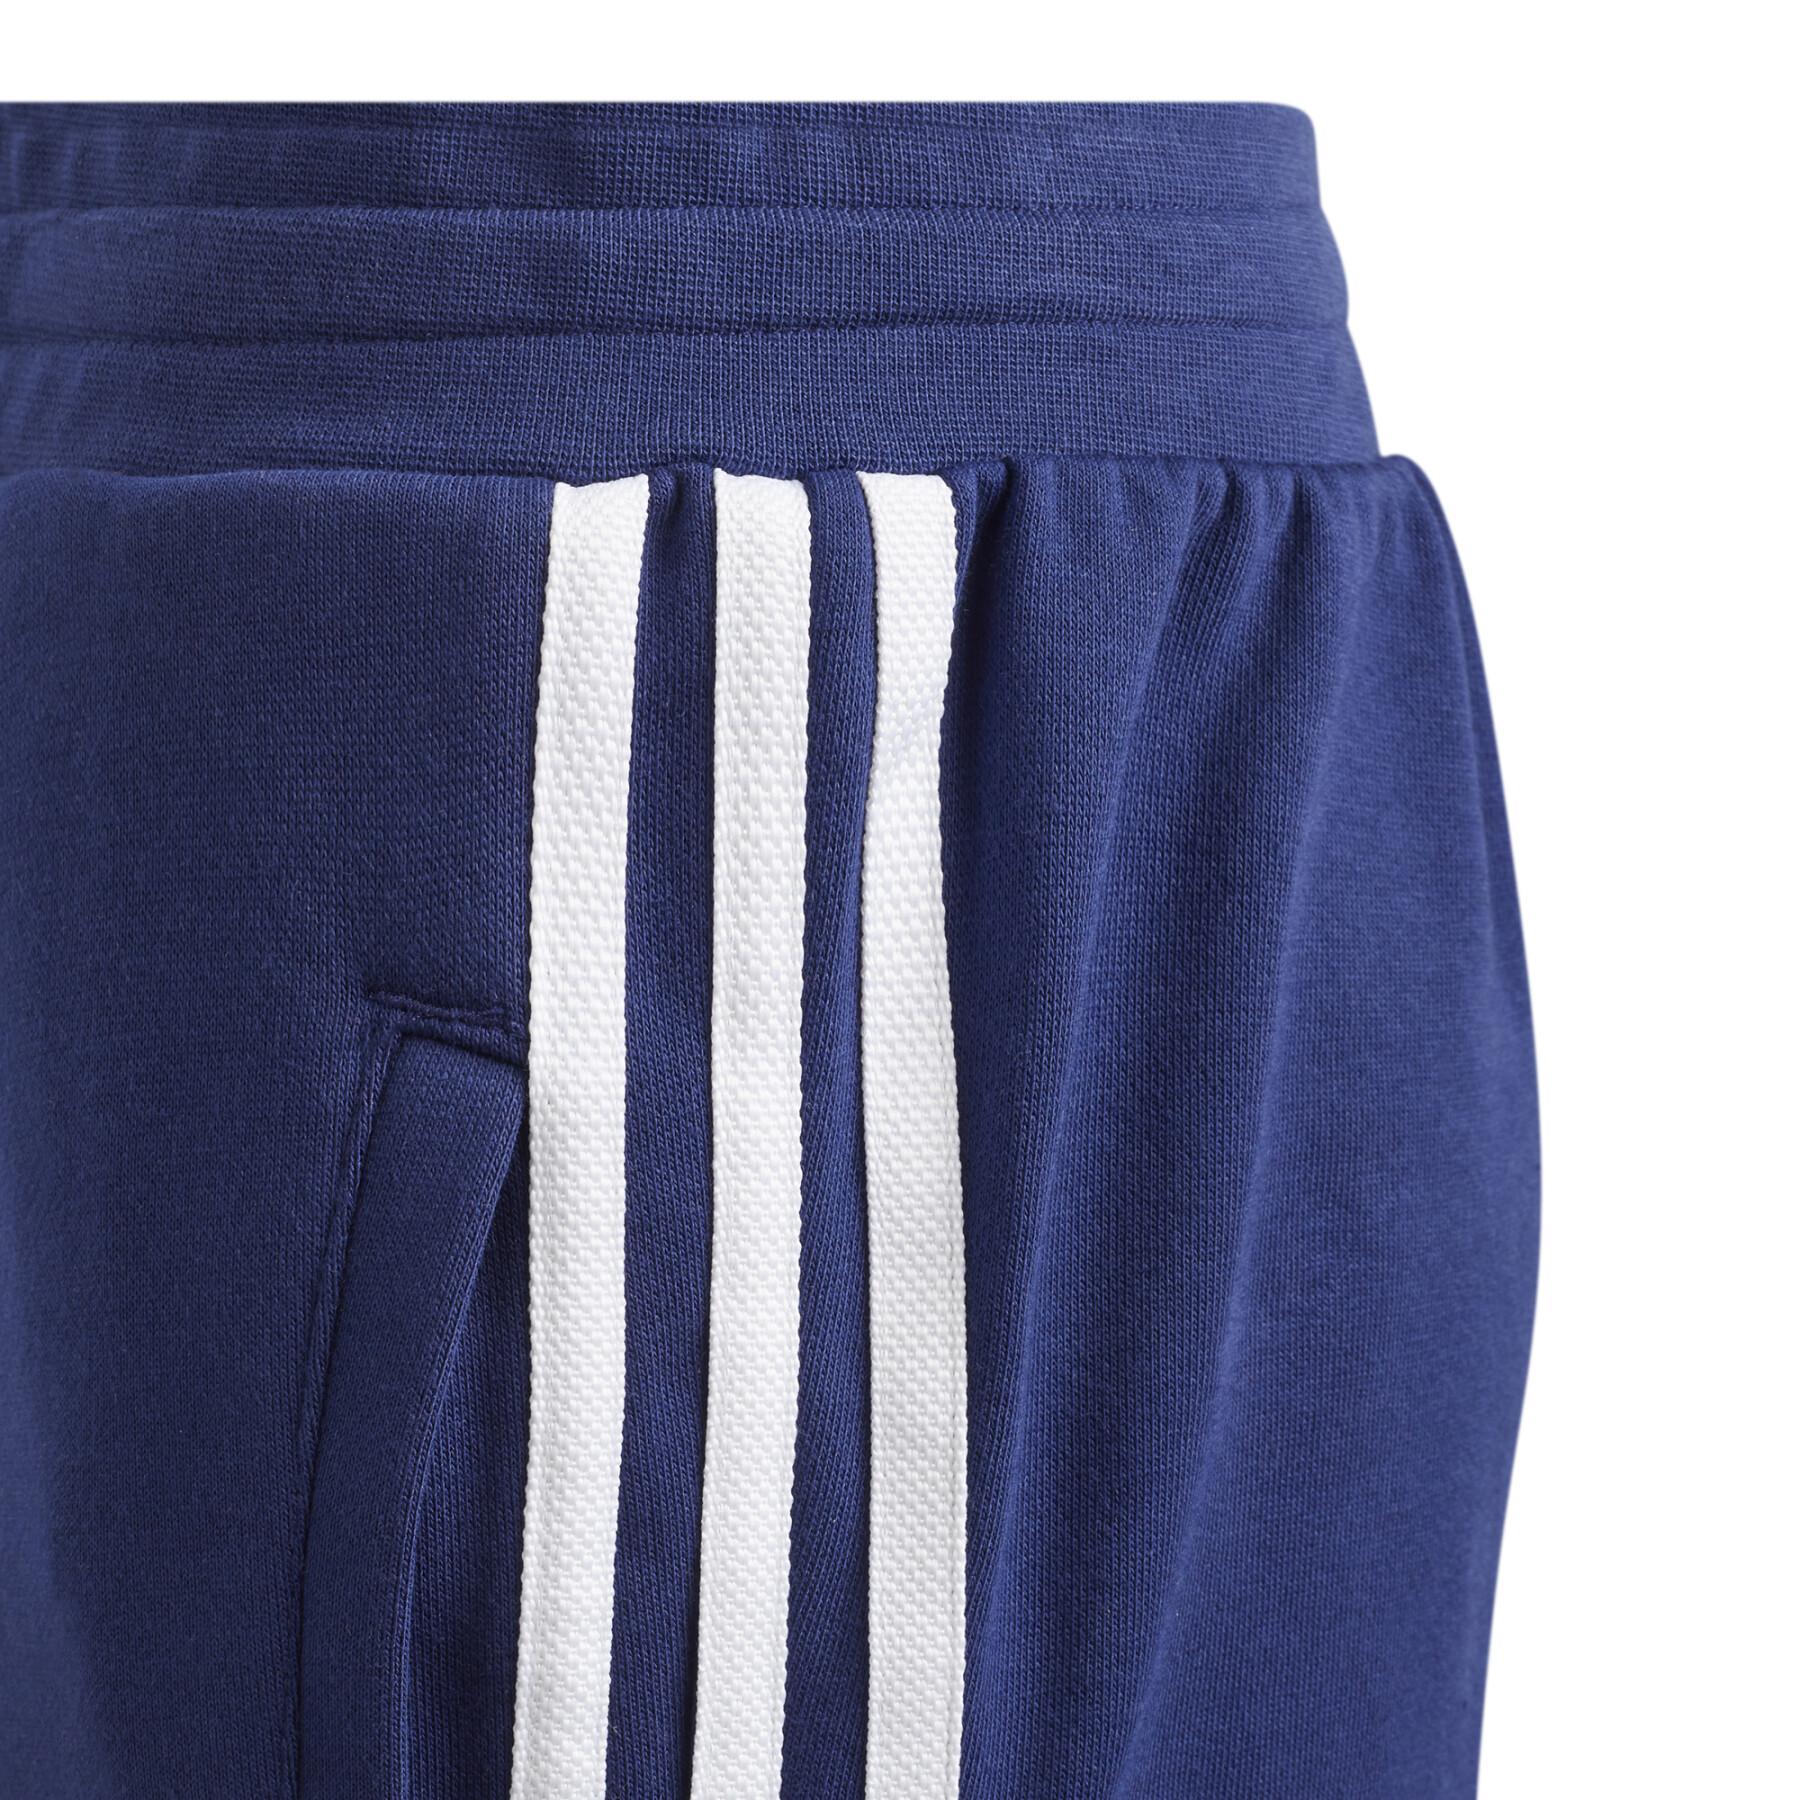 Children's sweatpants adidas Originals 3-Stripes